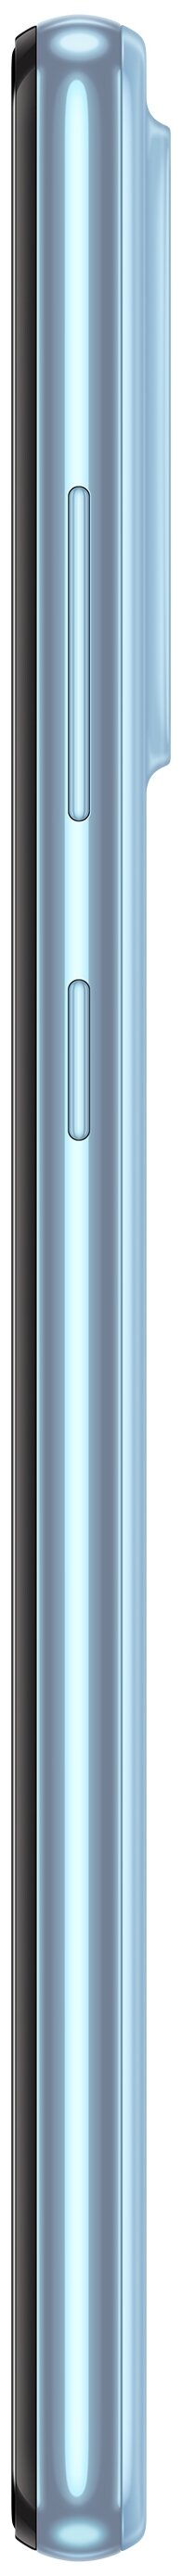 картинка Смартфон Samsung Galaxy A52 8/256GB (синий) от магазина Технолав